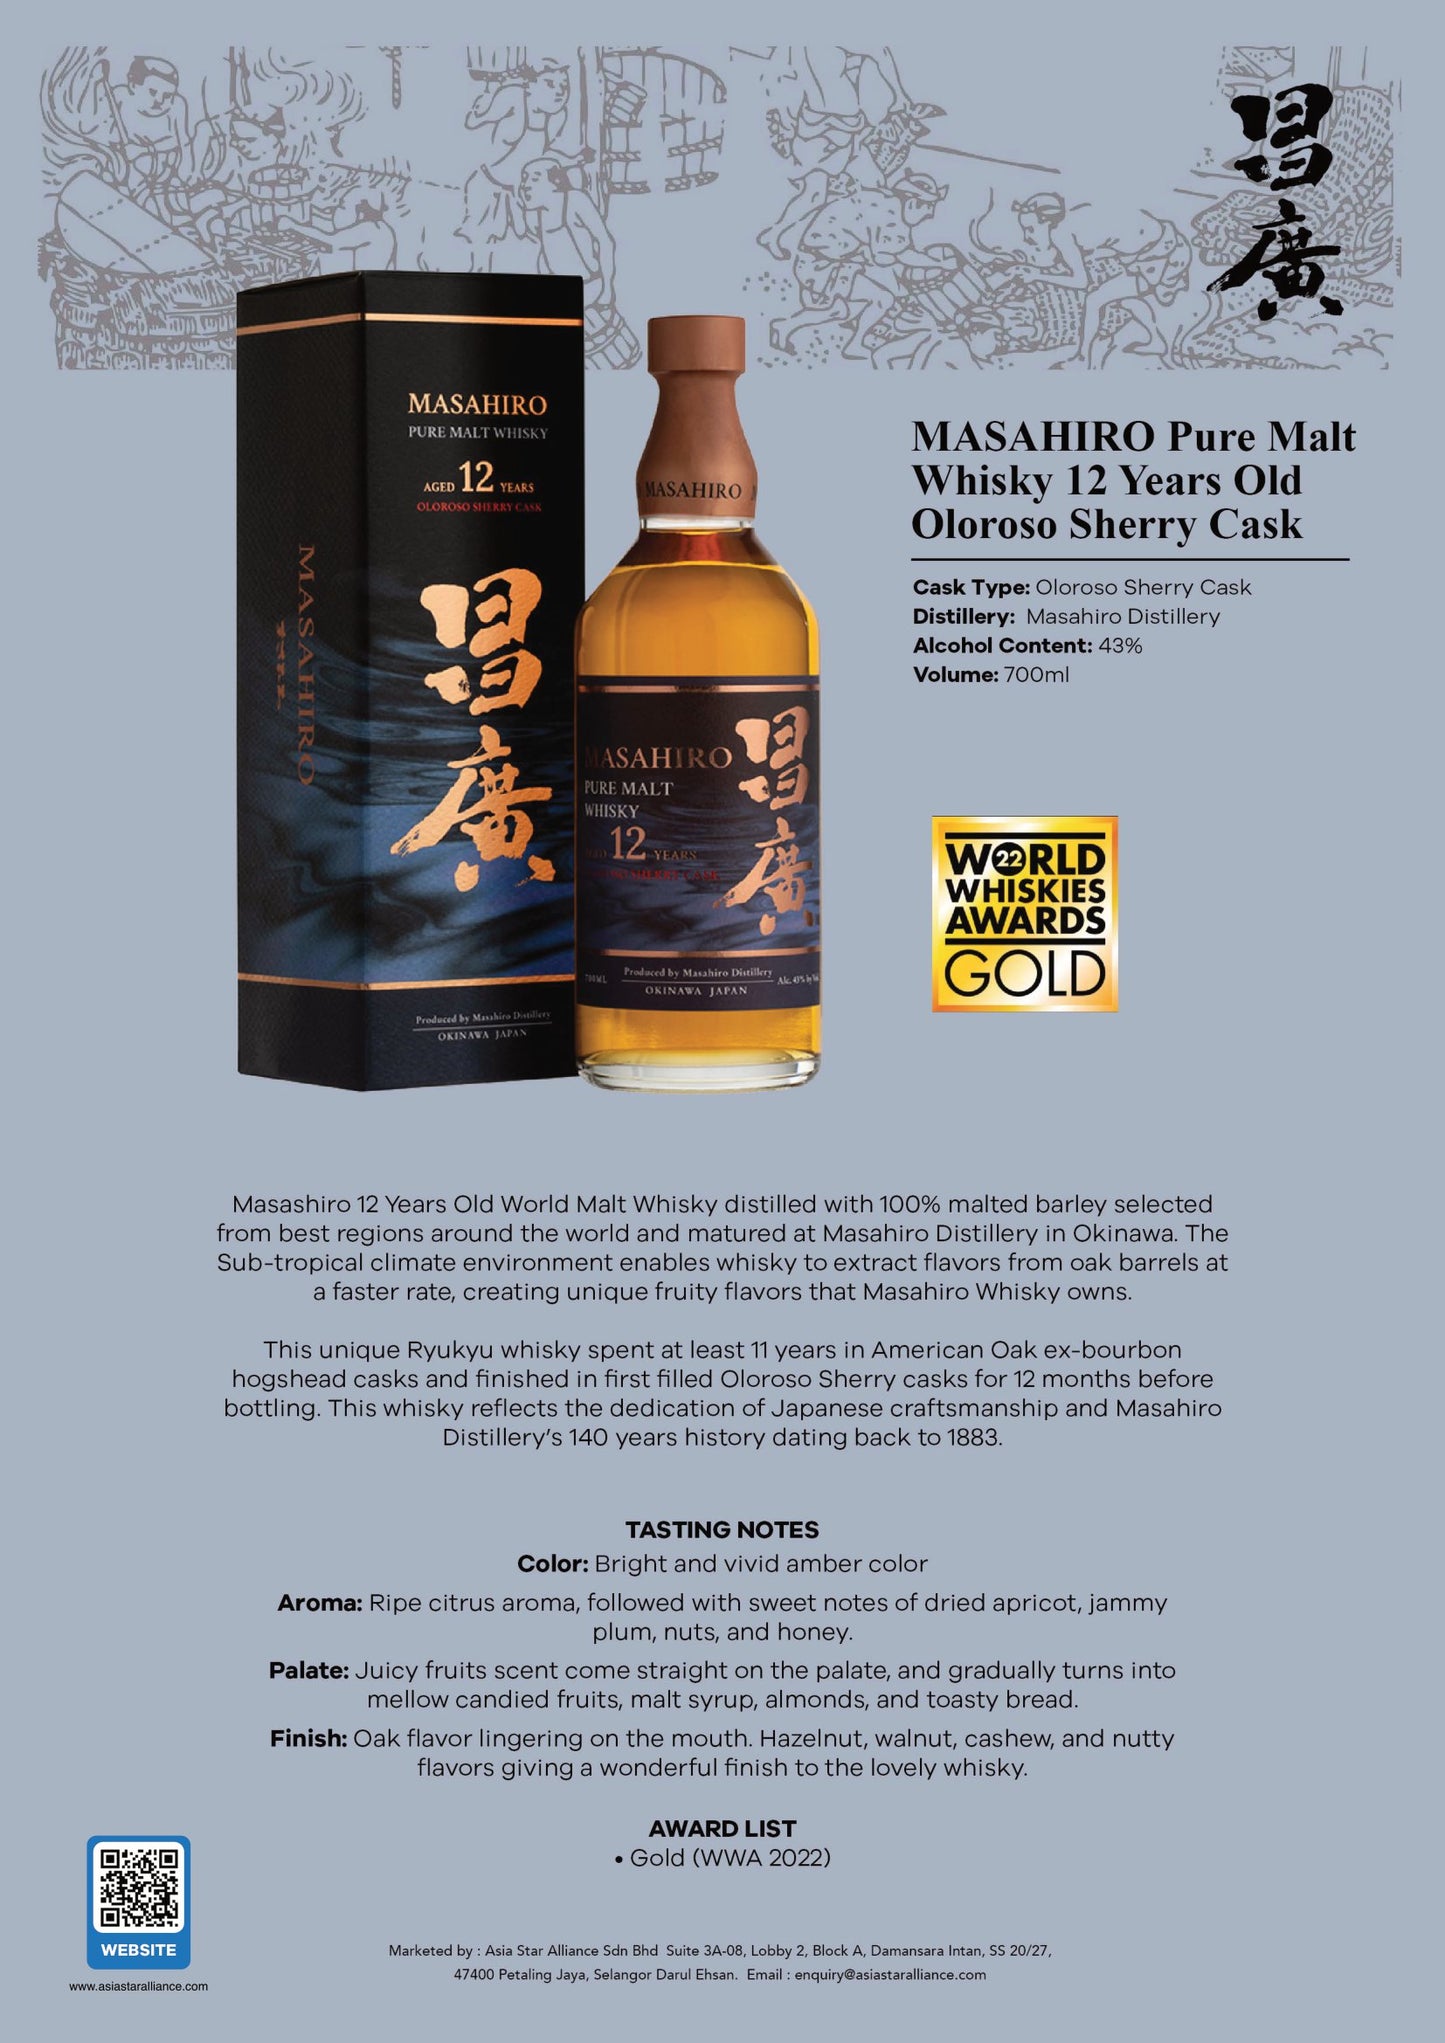 Masahiro 12 Years Old Pure Malt Whisky - Oloroso Sherry Cask [700ml]